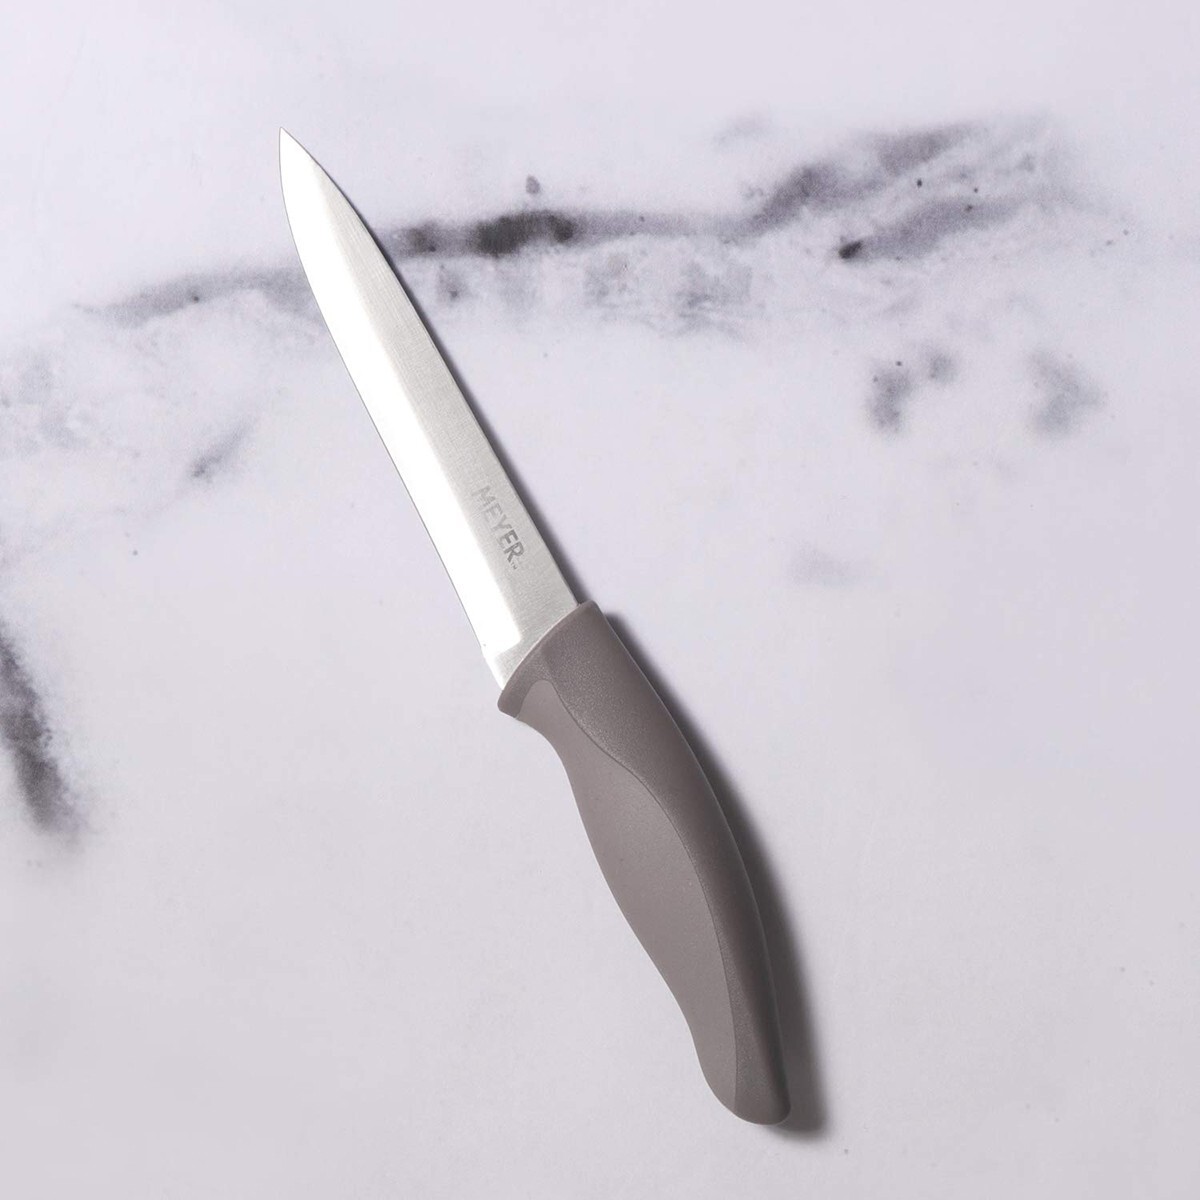 Meyer Utility Knife 12.5 48208-C